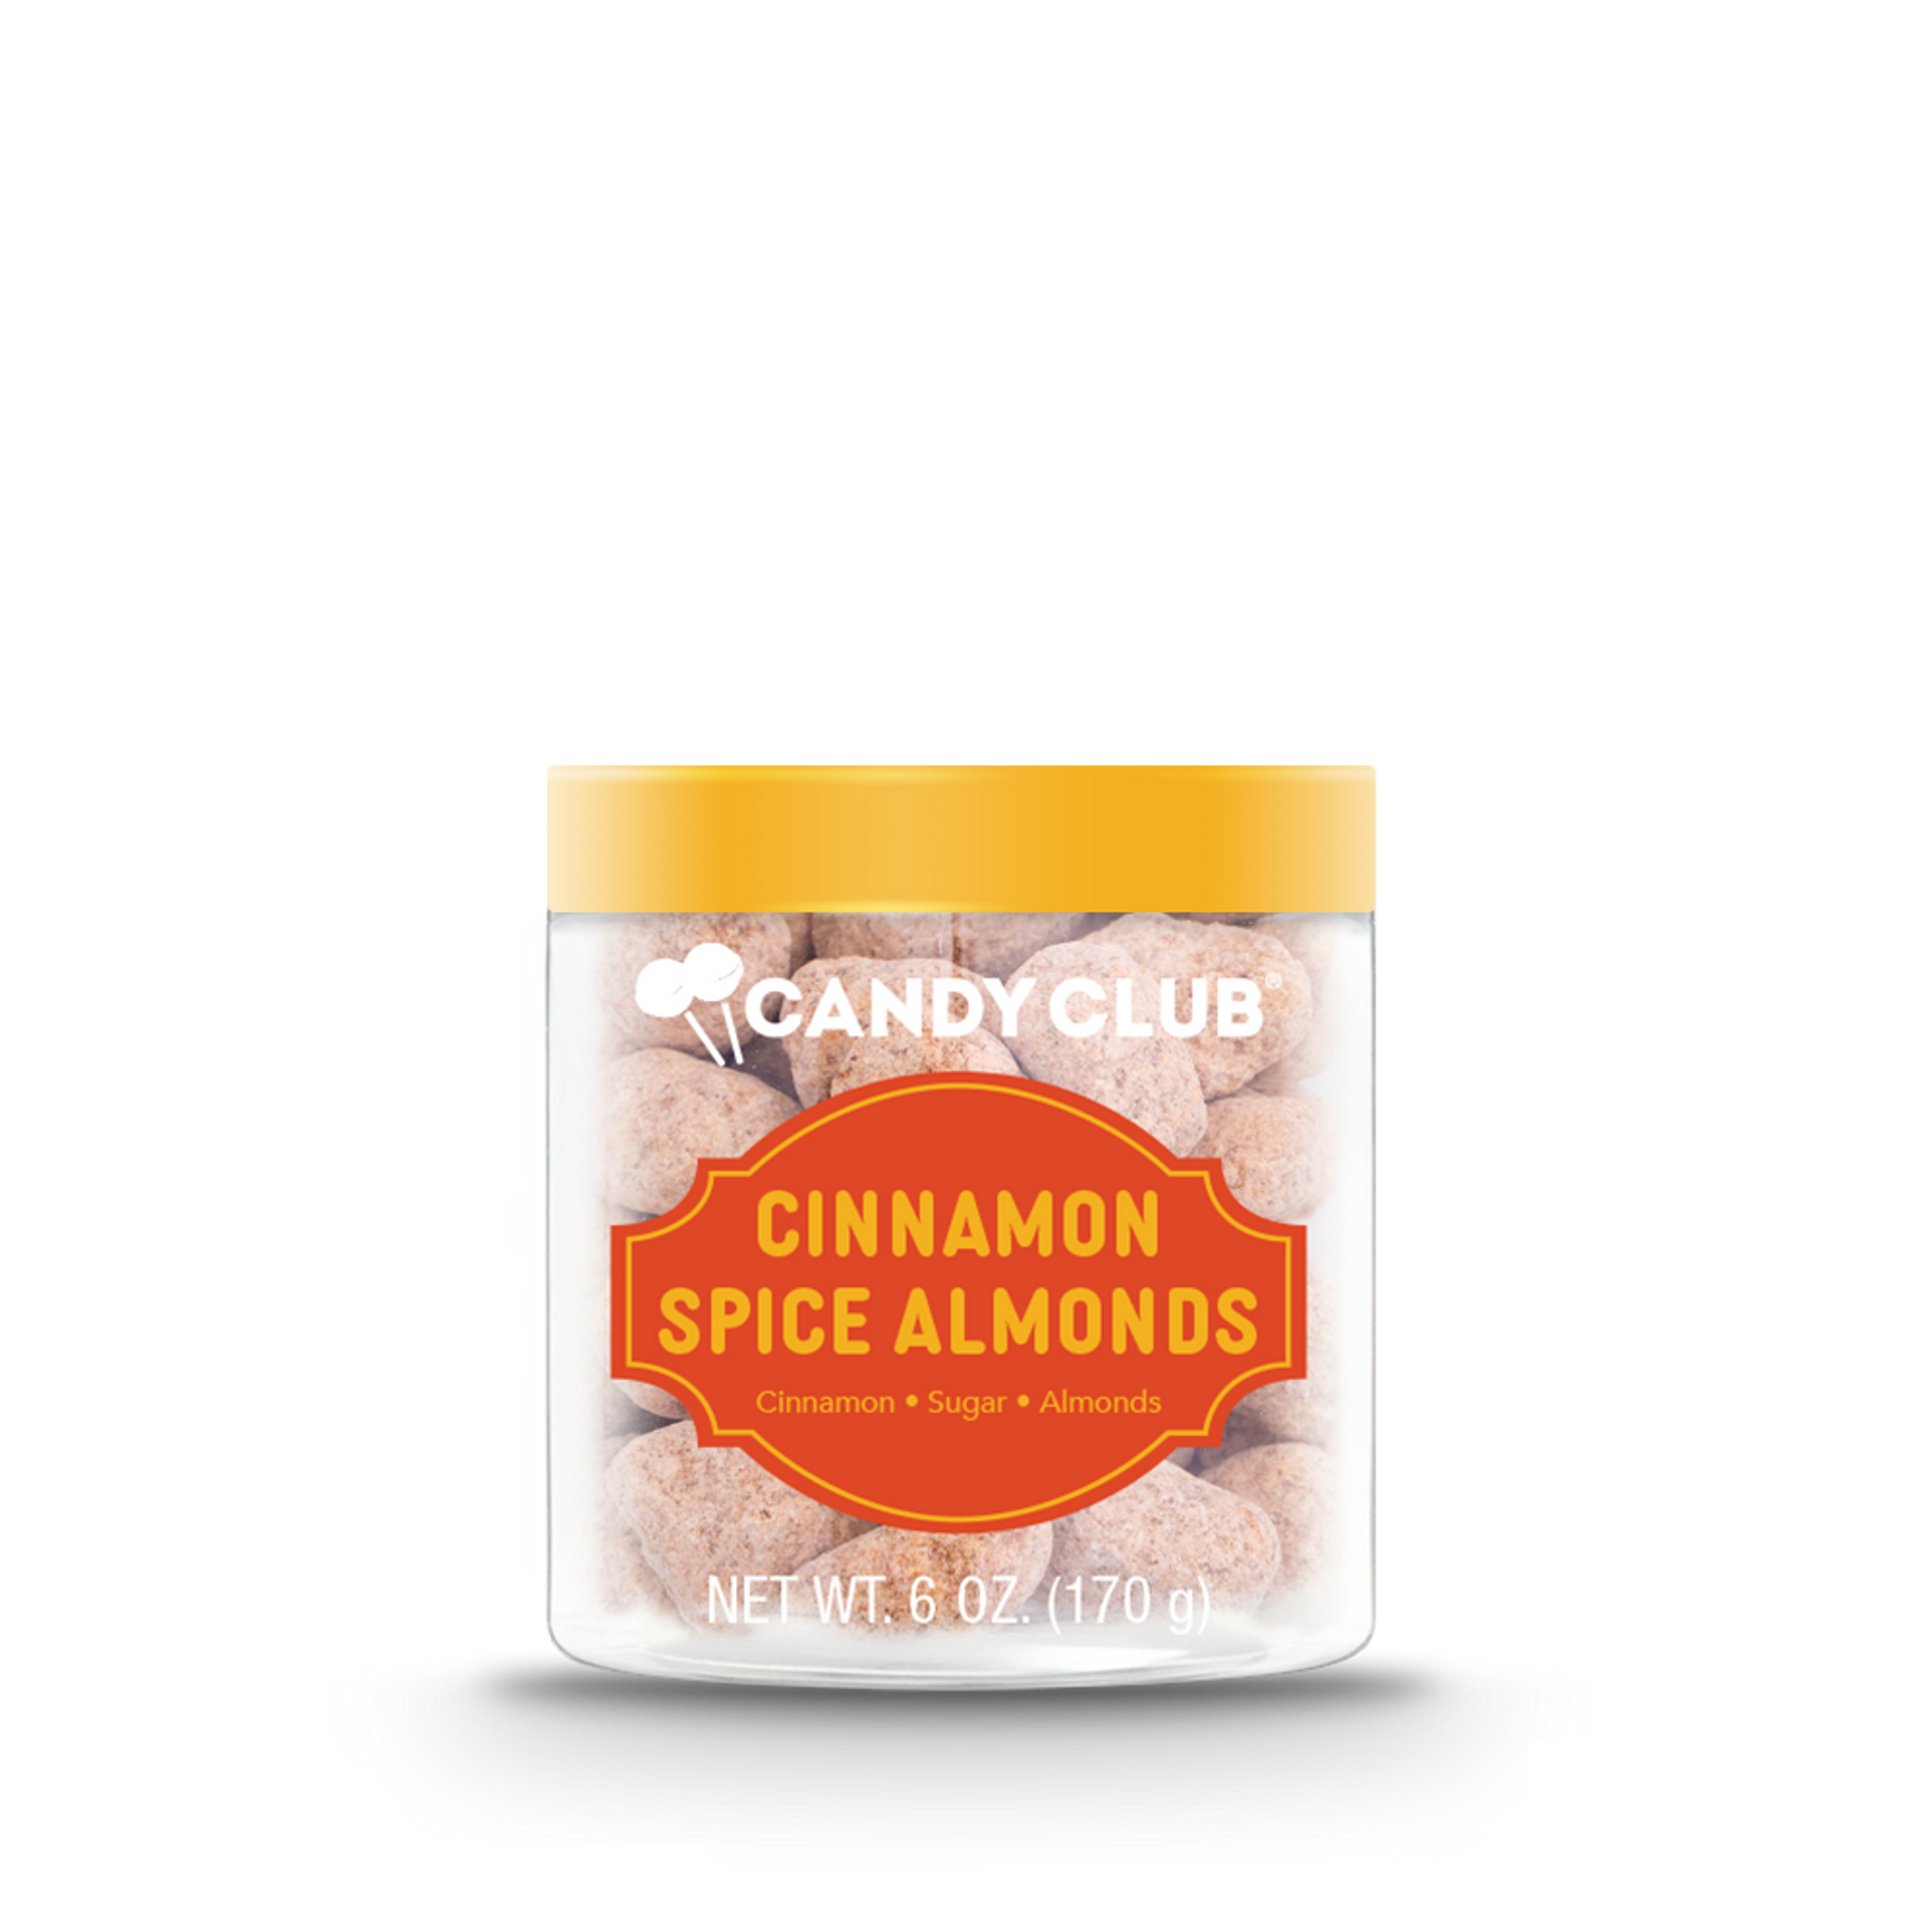 Cinnamon Spiced Almonds